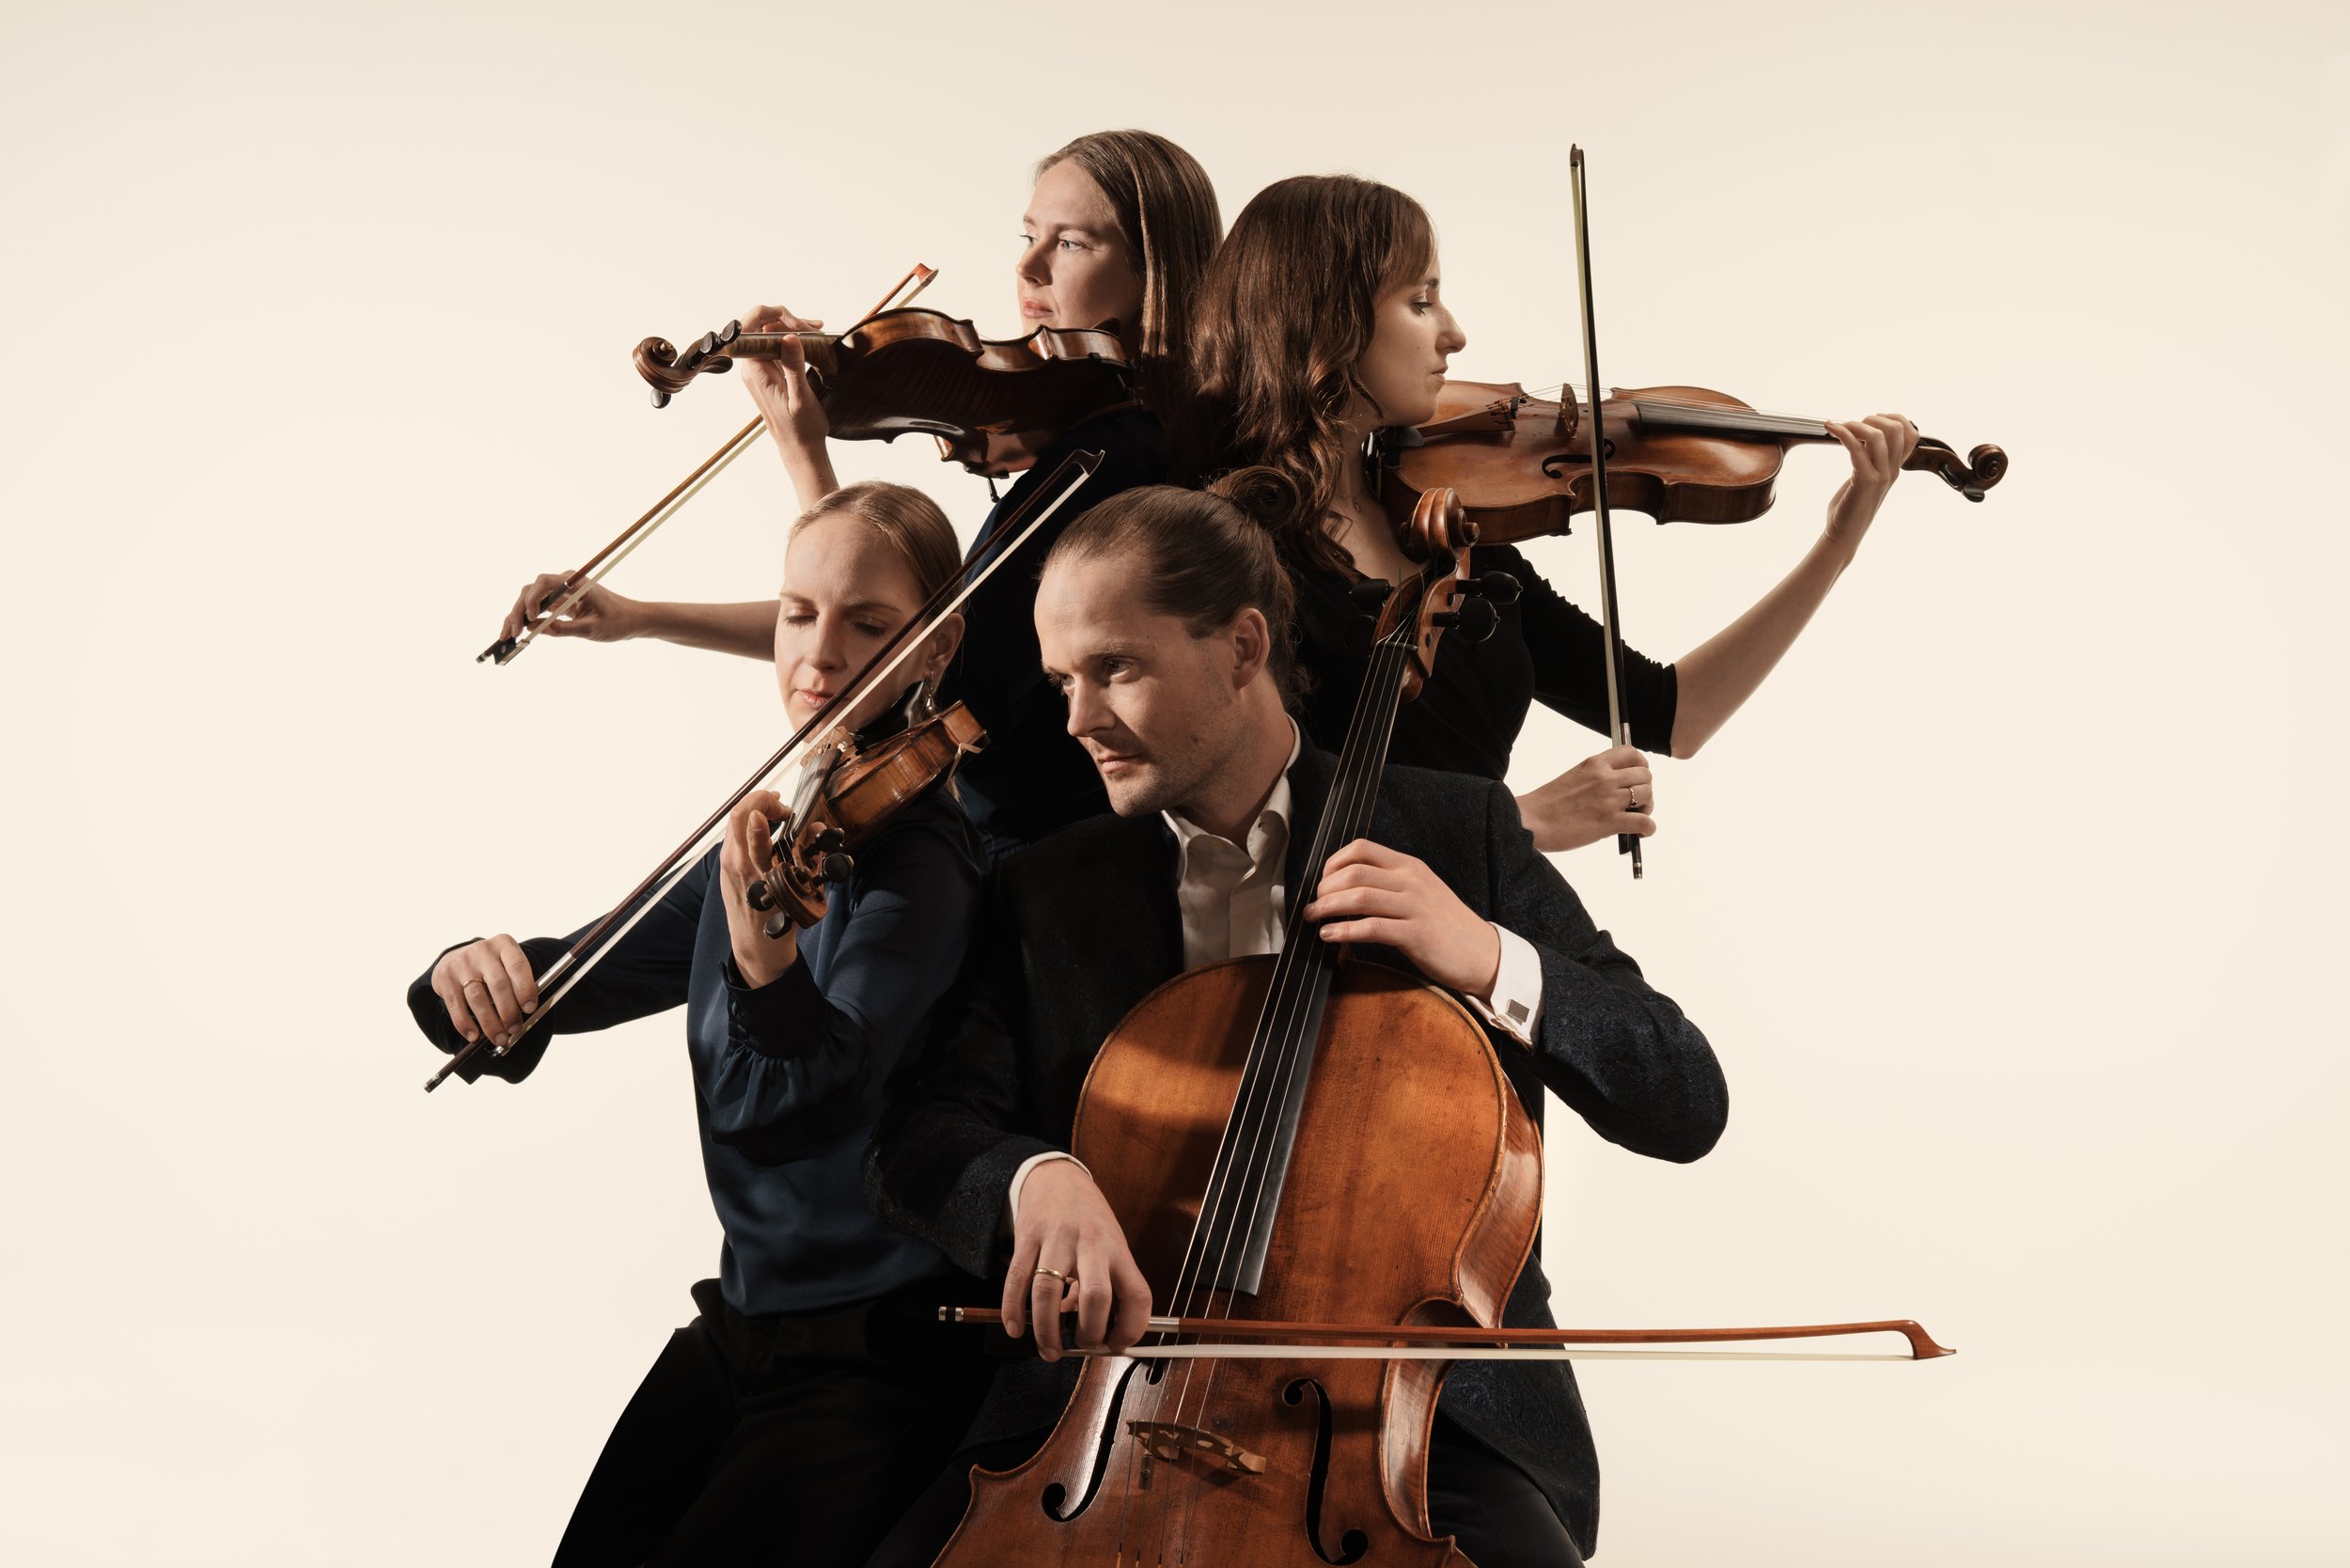 Promotional image of the Dudok Quartet